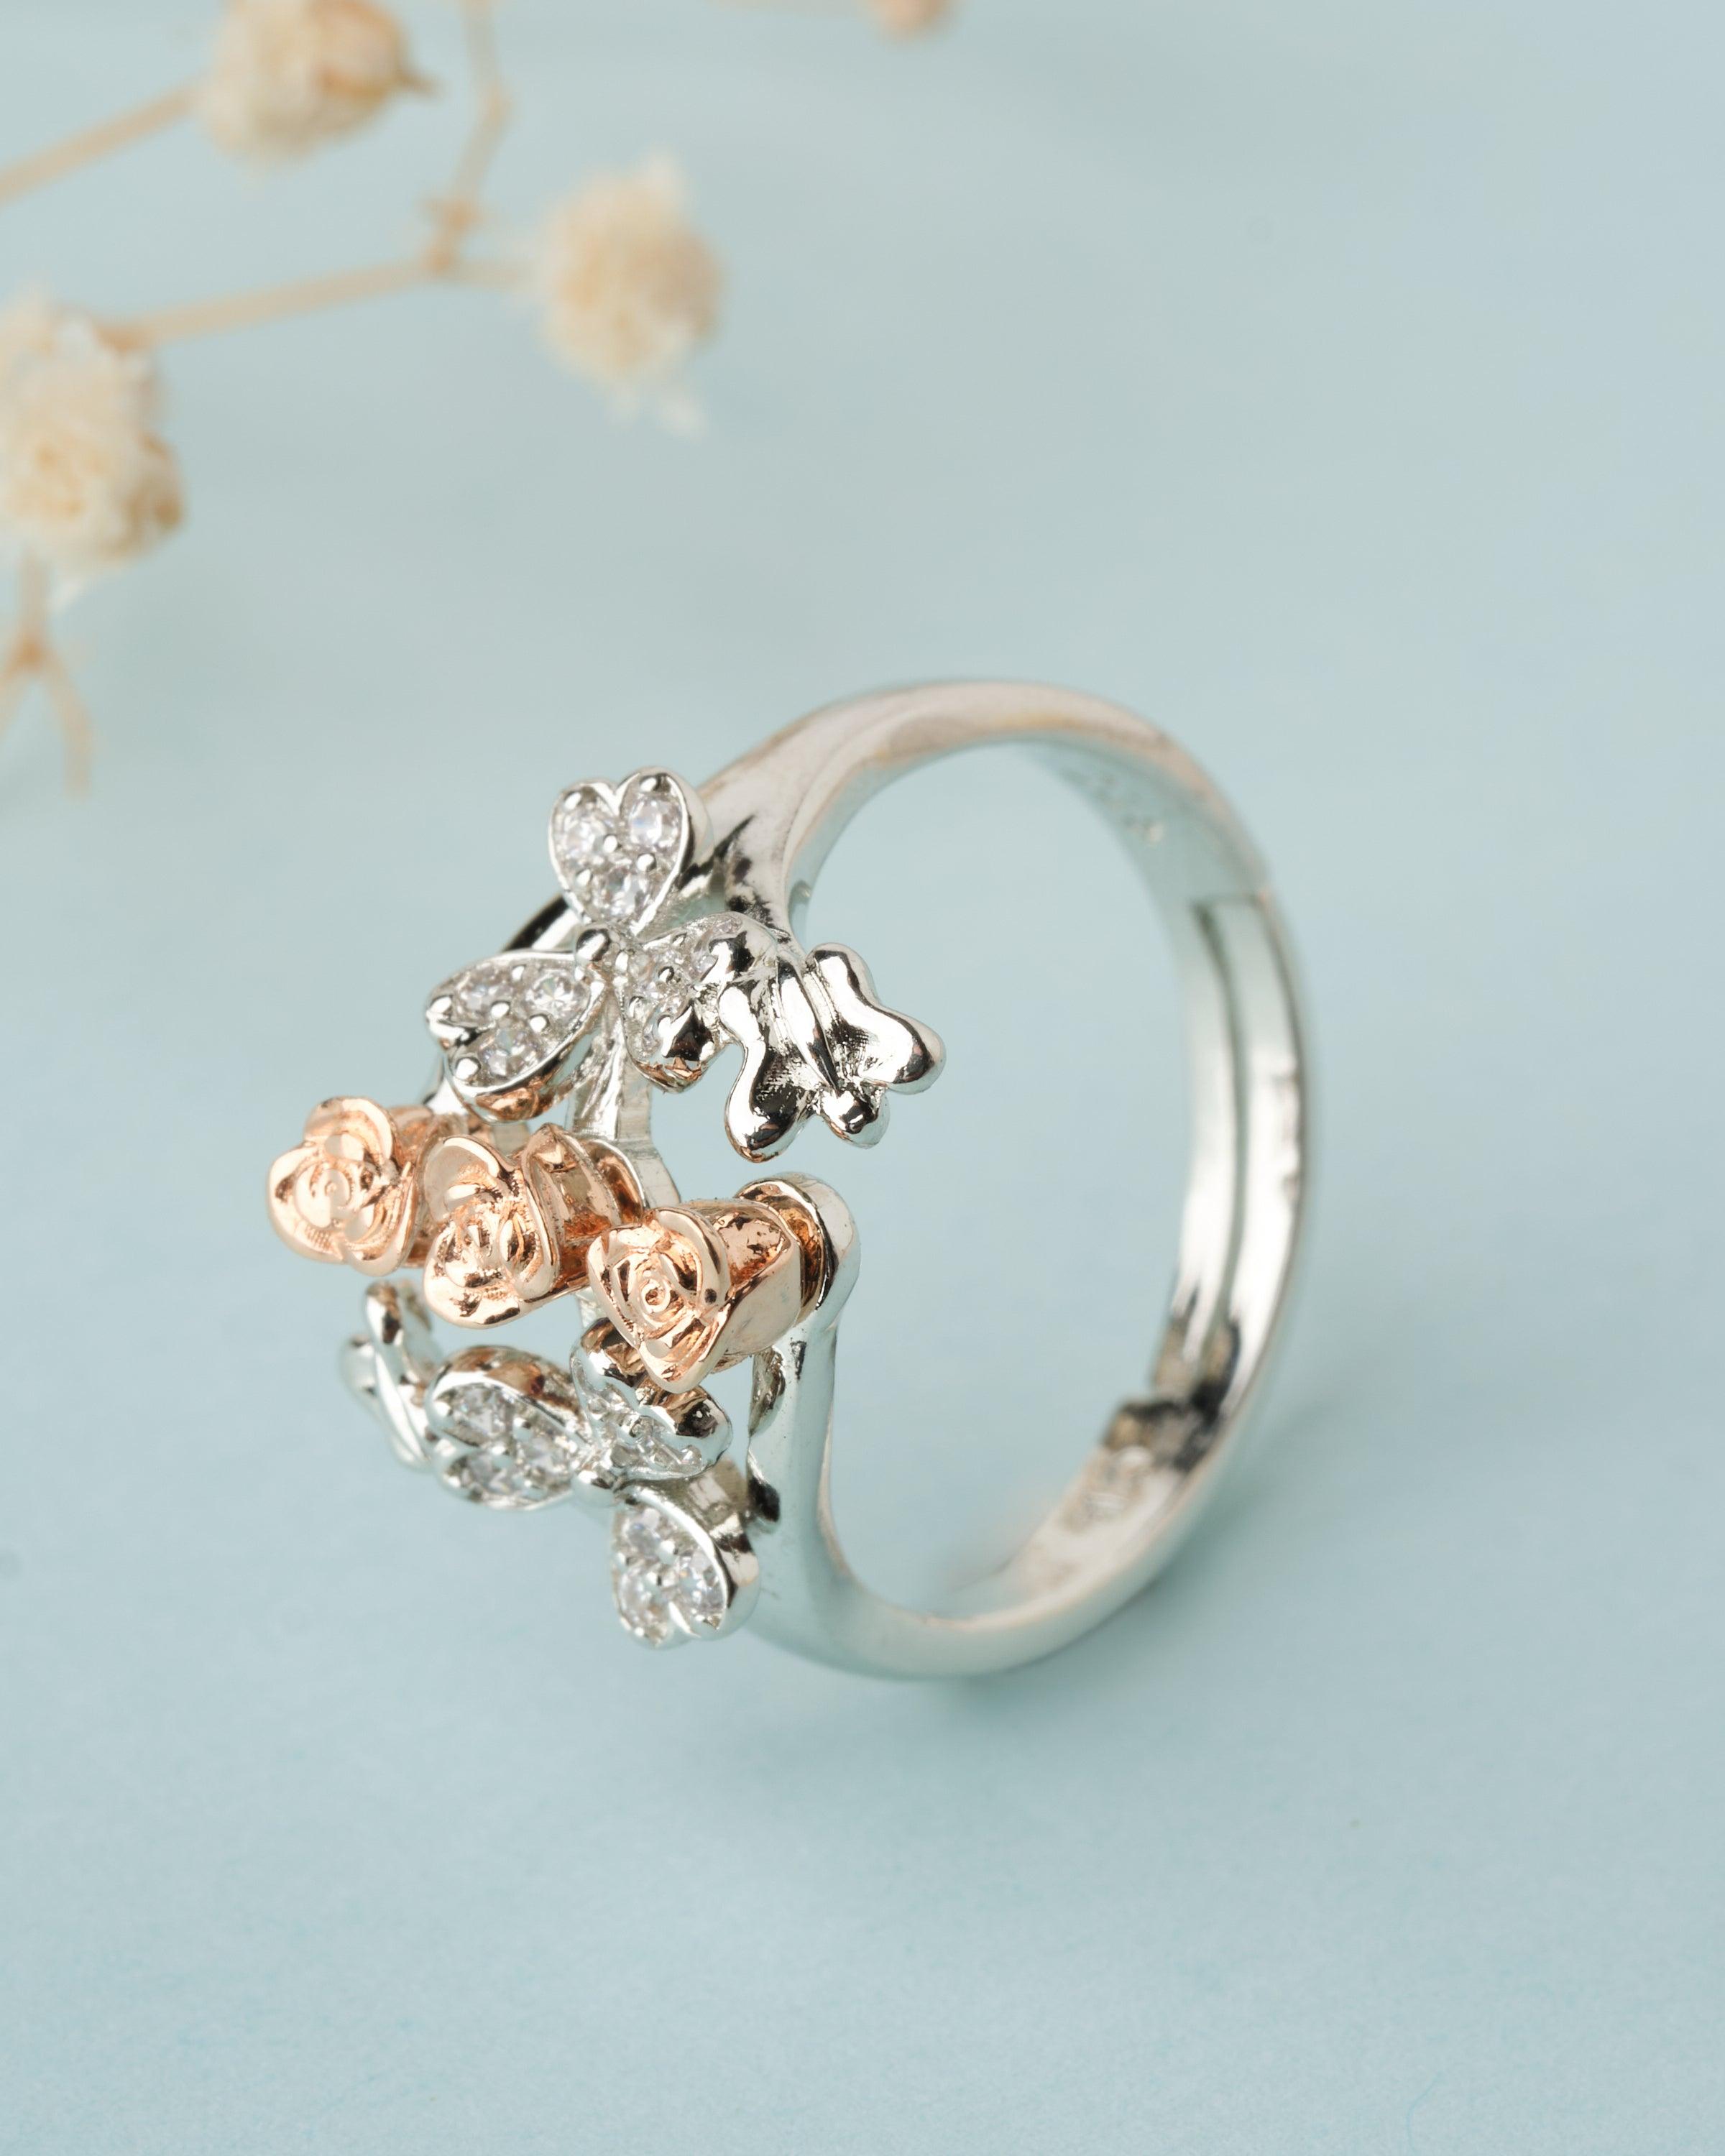 12 Impossibly Beautiful Rose Gold Wedding Engagement Rings -  Elegantweddinginvites.com Blog